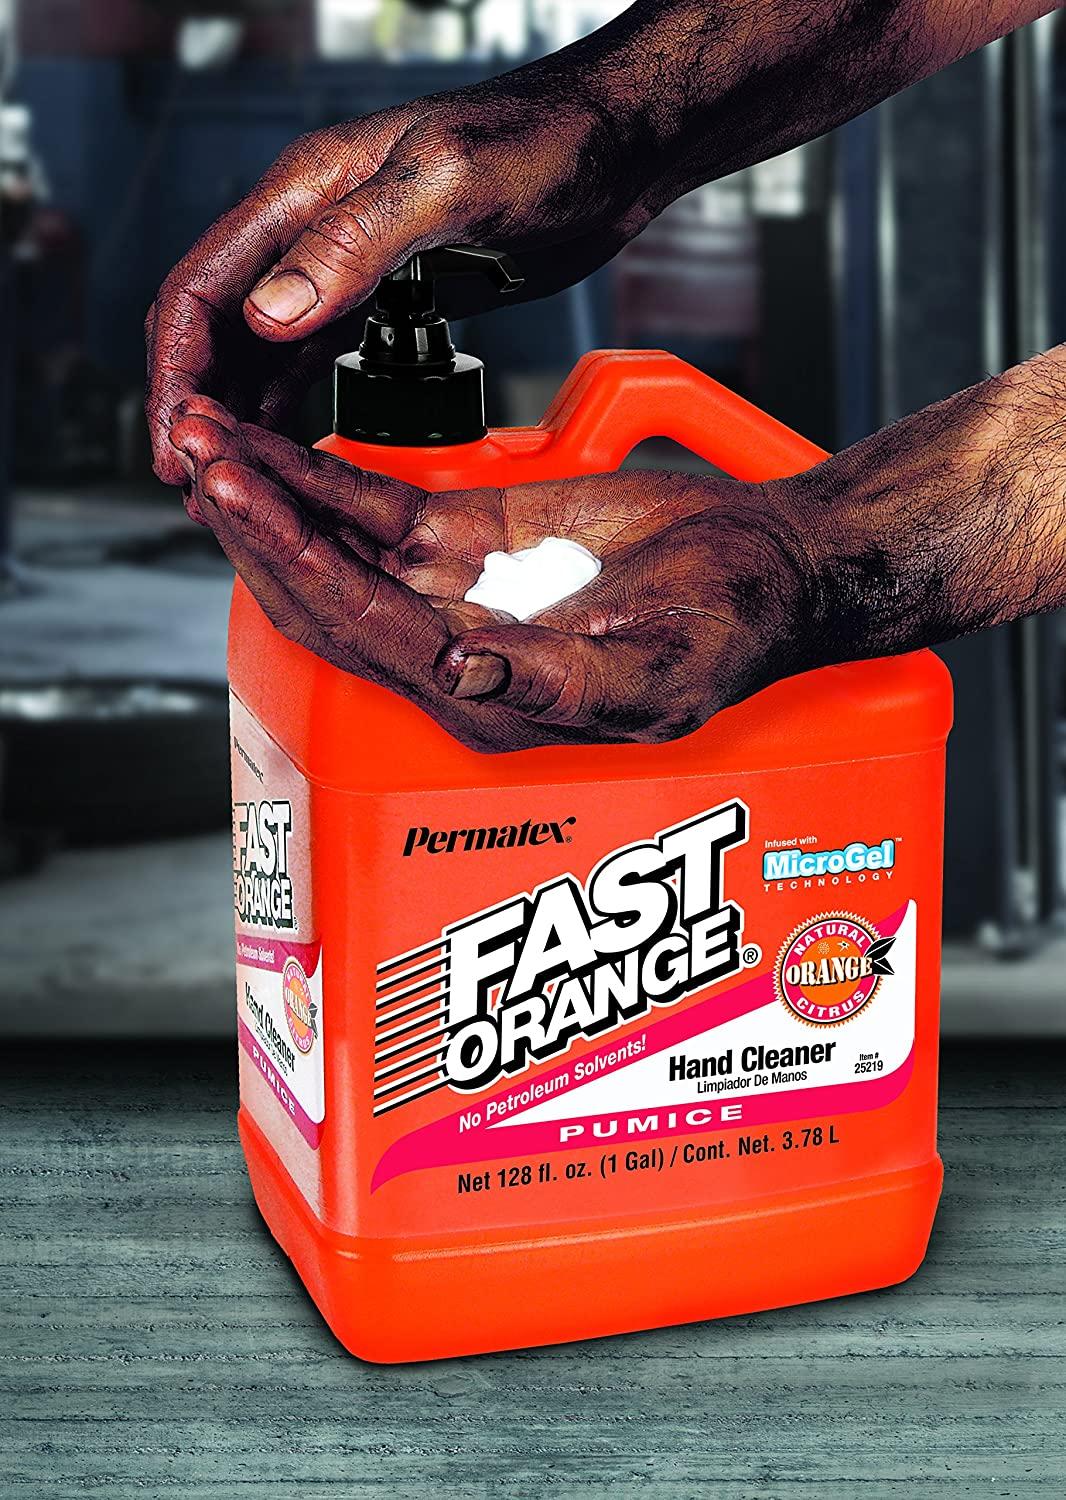 Permatex Fast Orange Pumice Lotion Hand Cleaner 25219 - 1gal *(Pack of 8)*